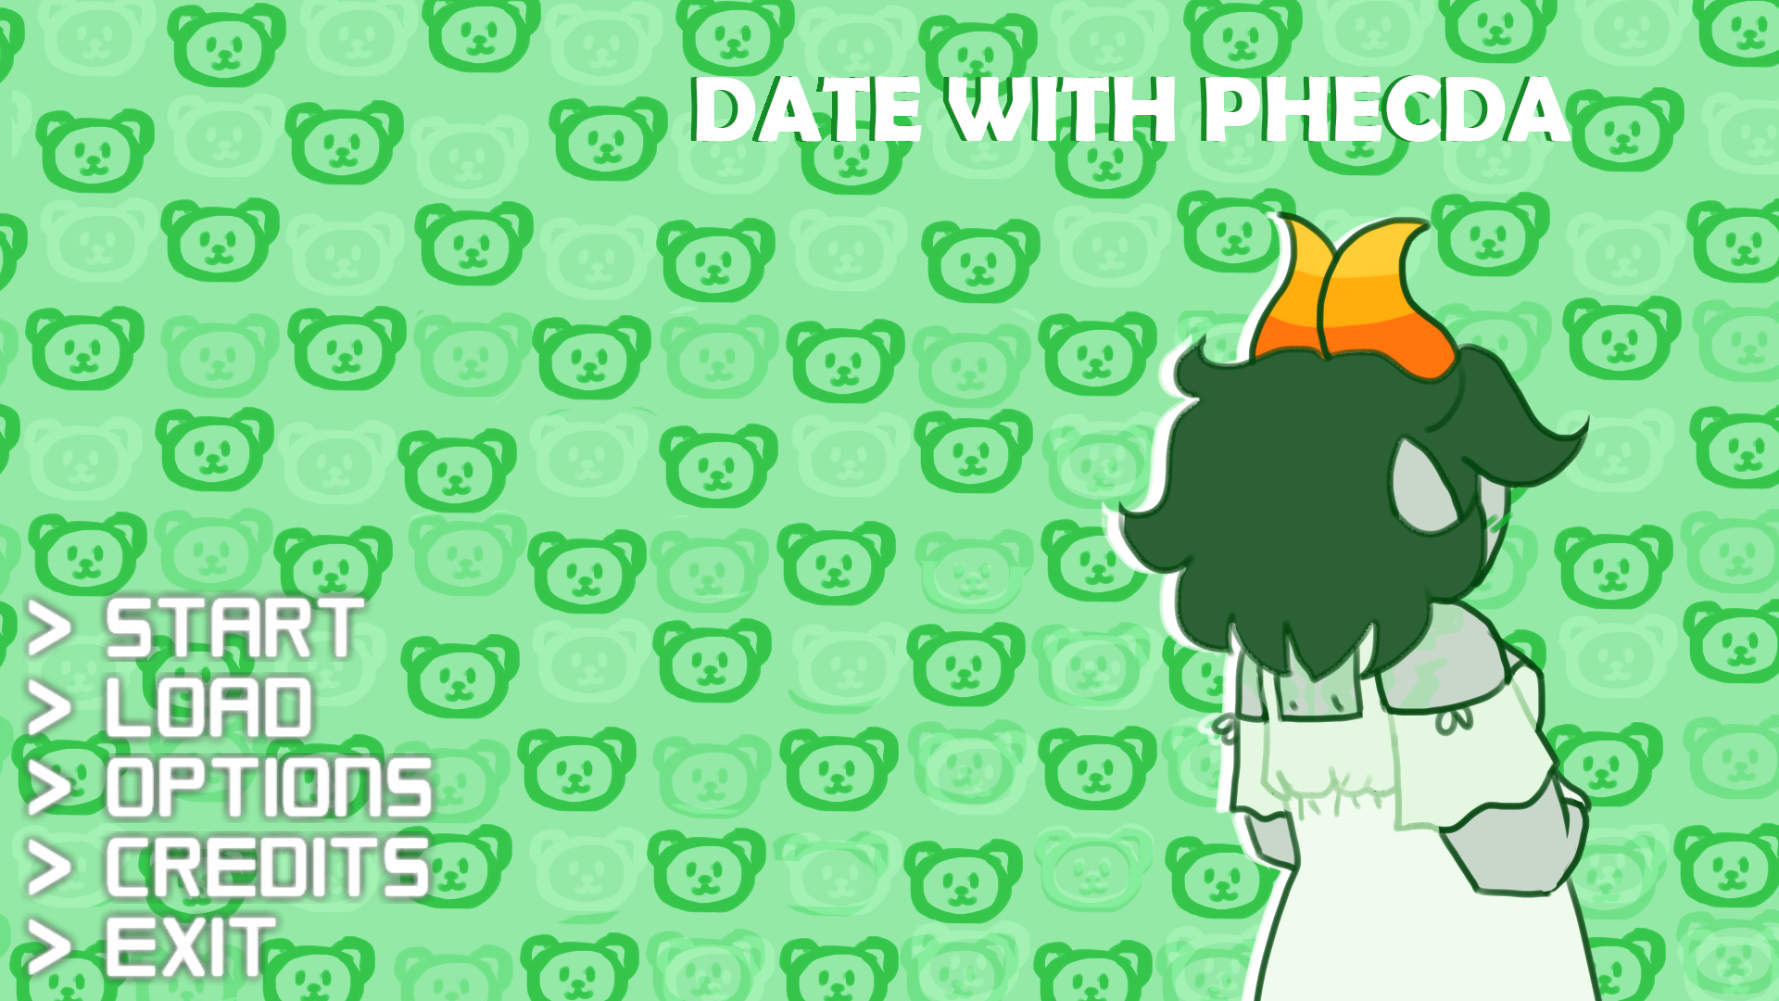 Date with Phecda